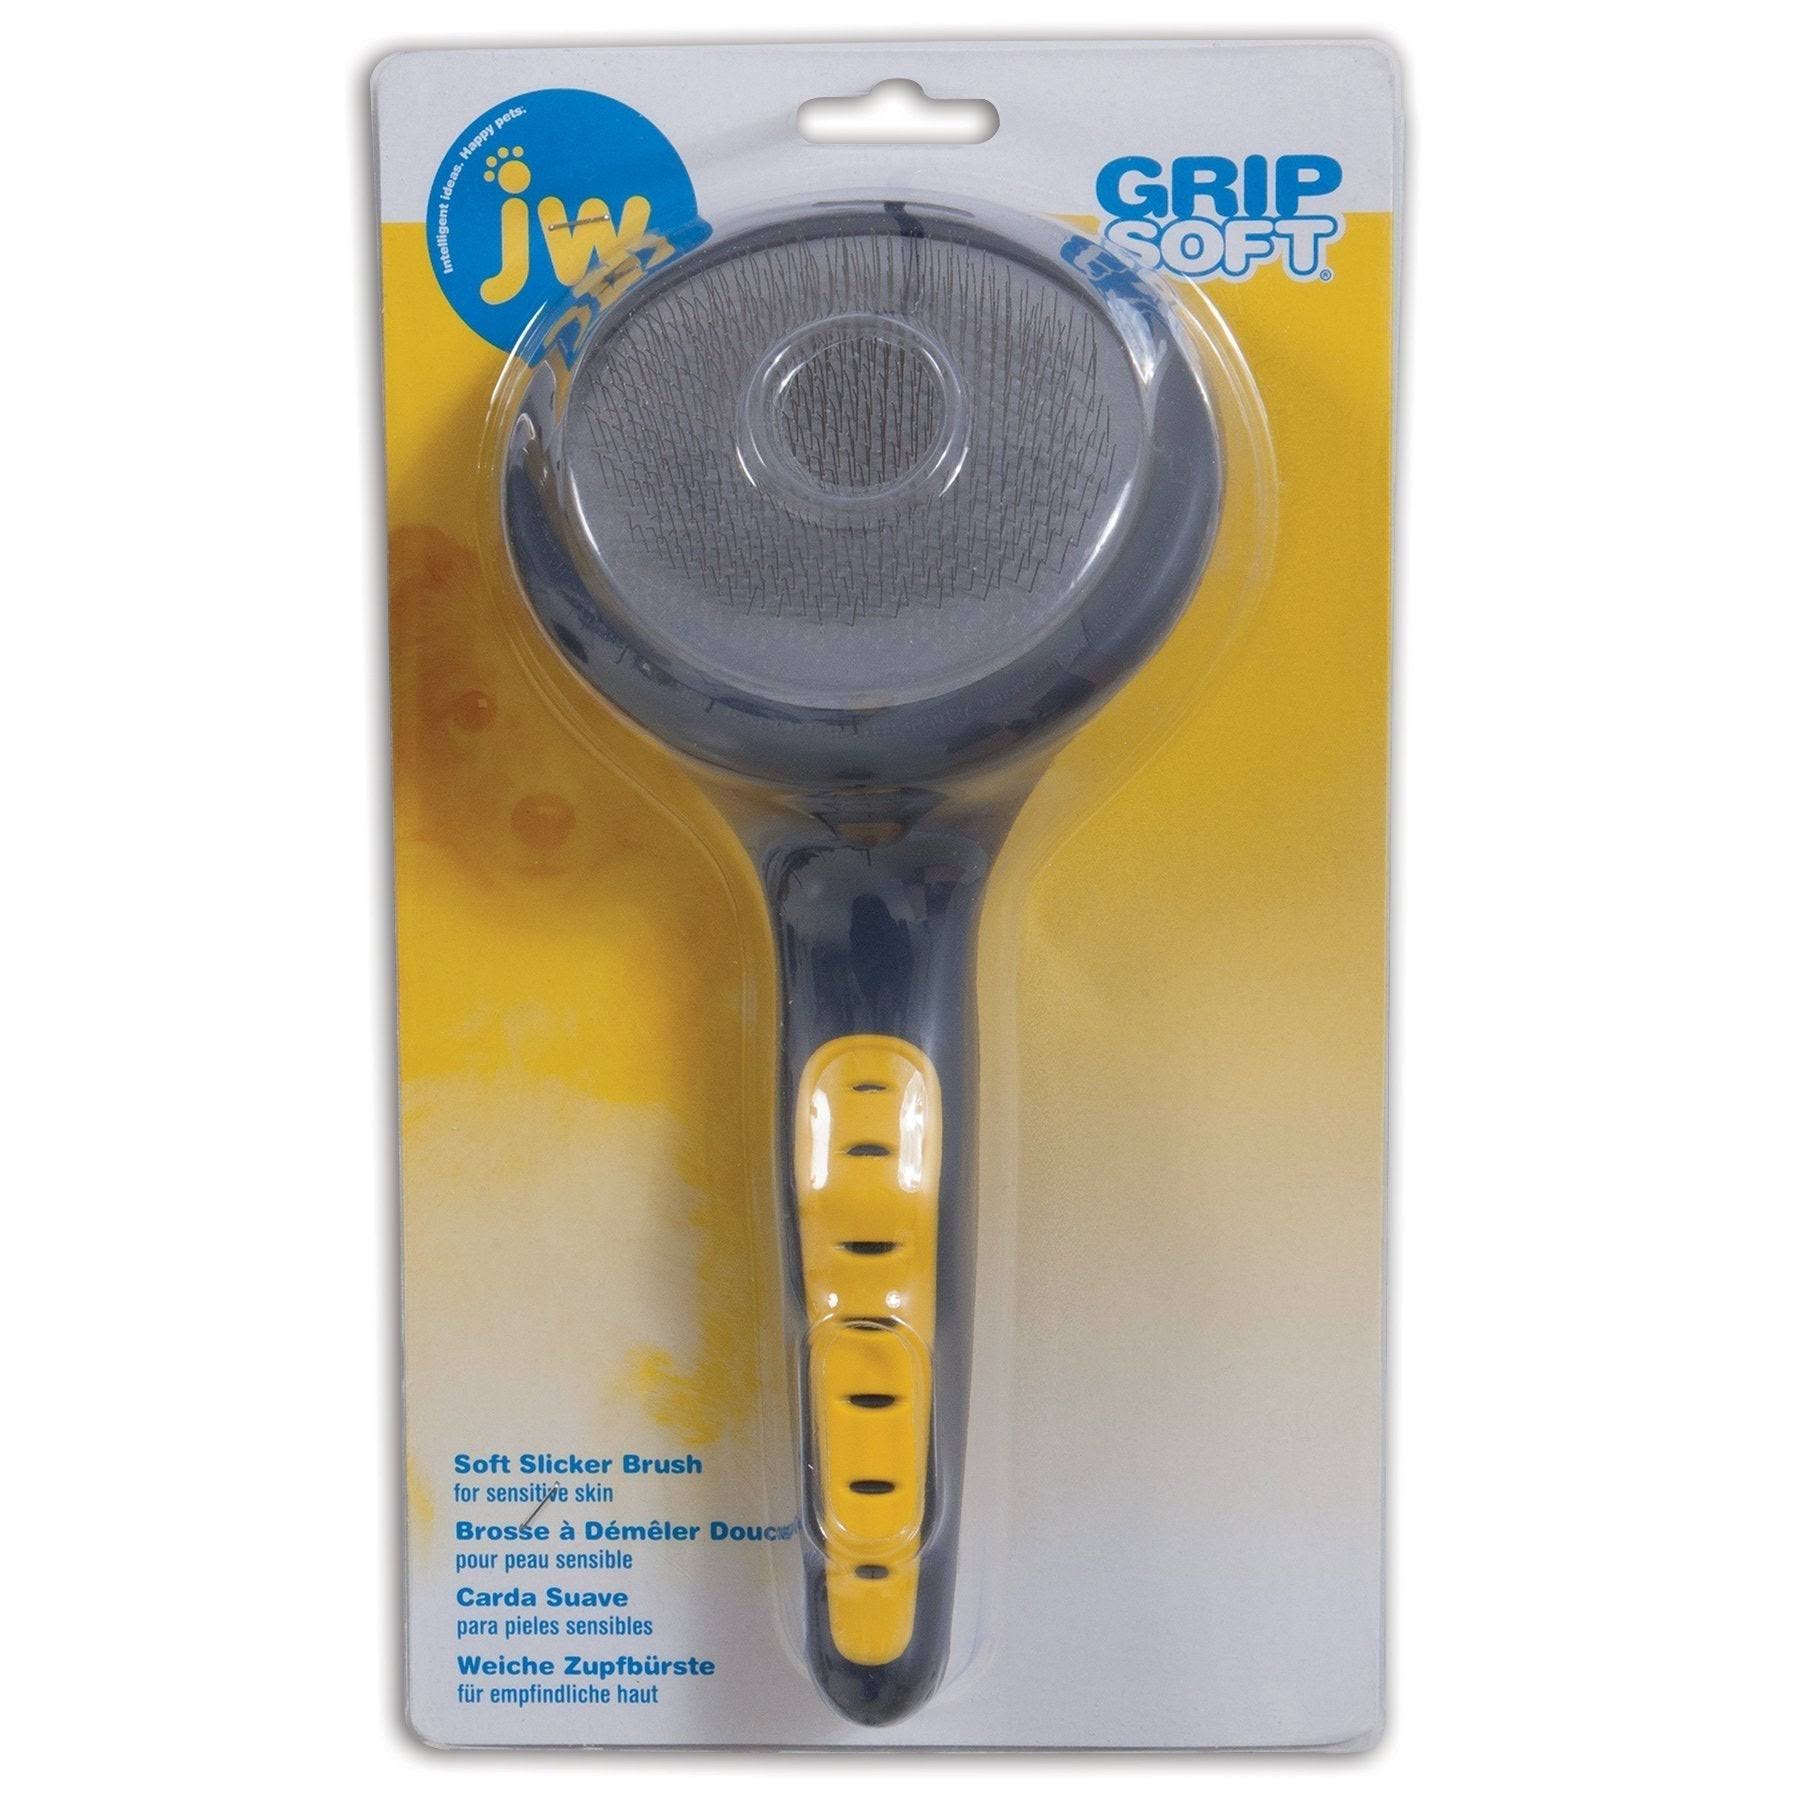 JW Pet Company GripSoft Slicker Brush Soft Pin